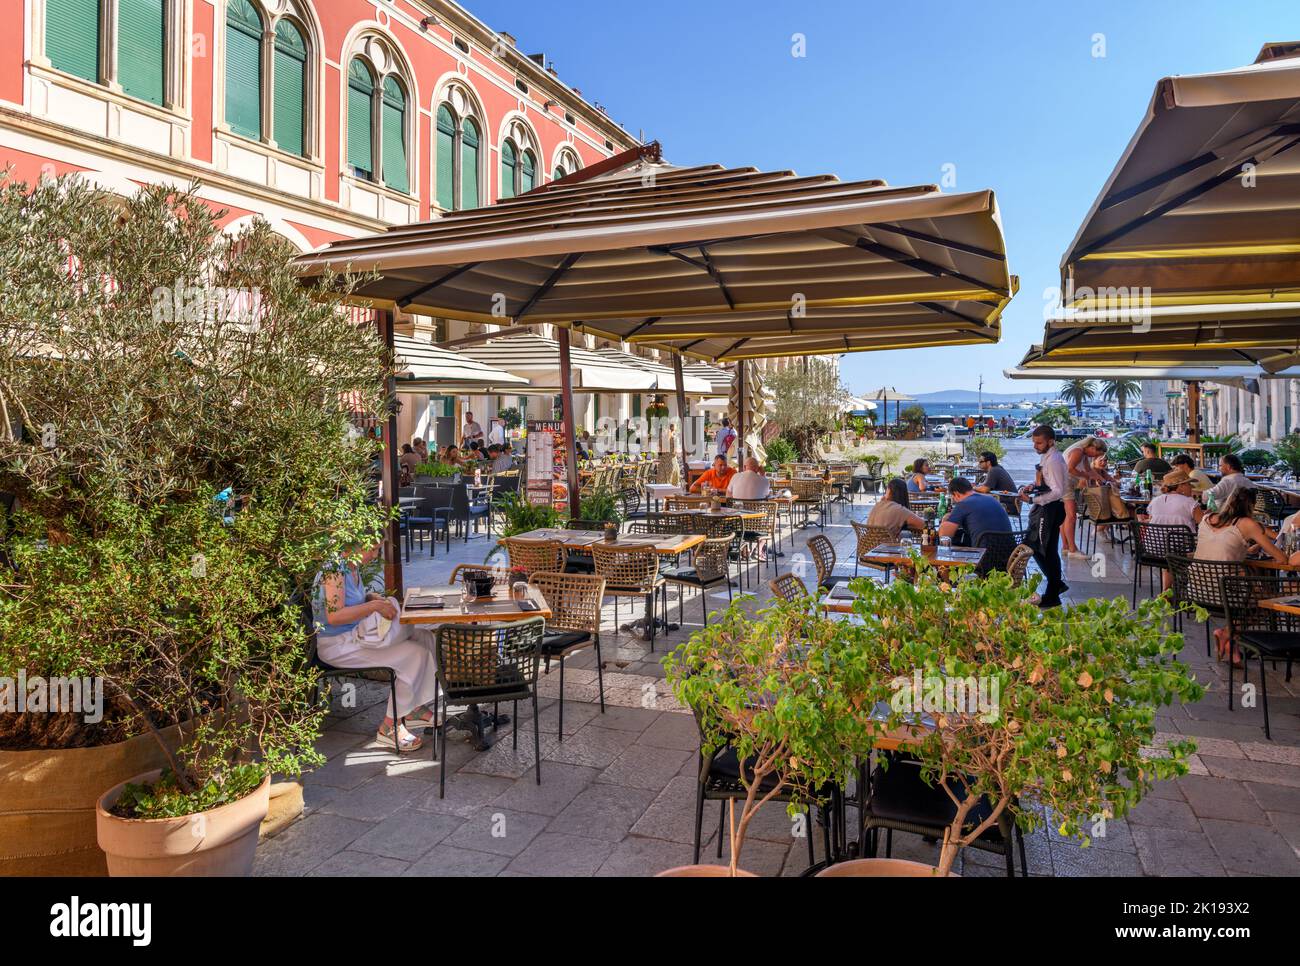 Restaurant on Trg Republike (Plaza de la Republica), old town of Split, Croatia Stock Photo